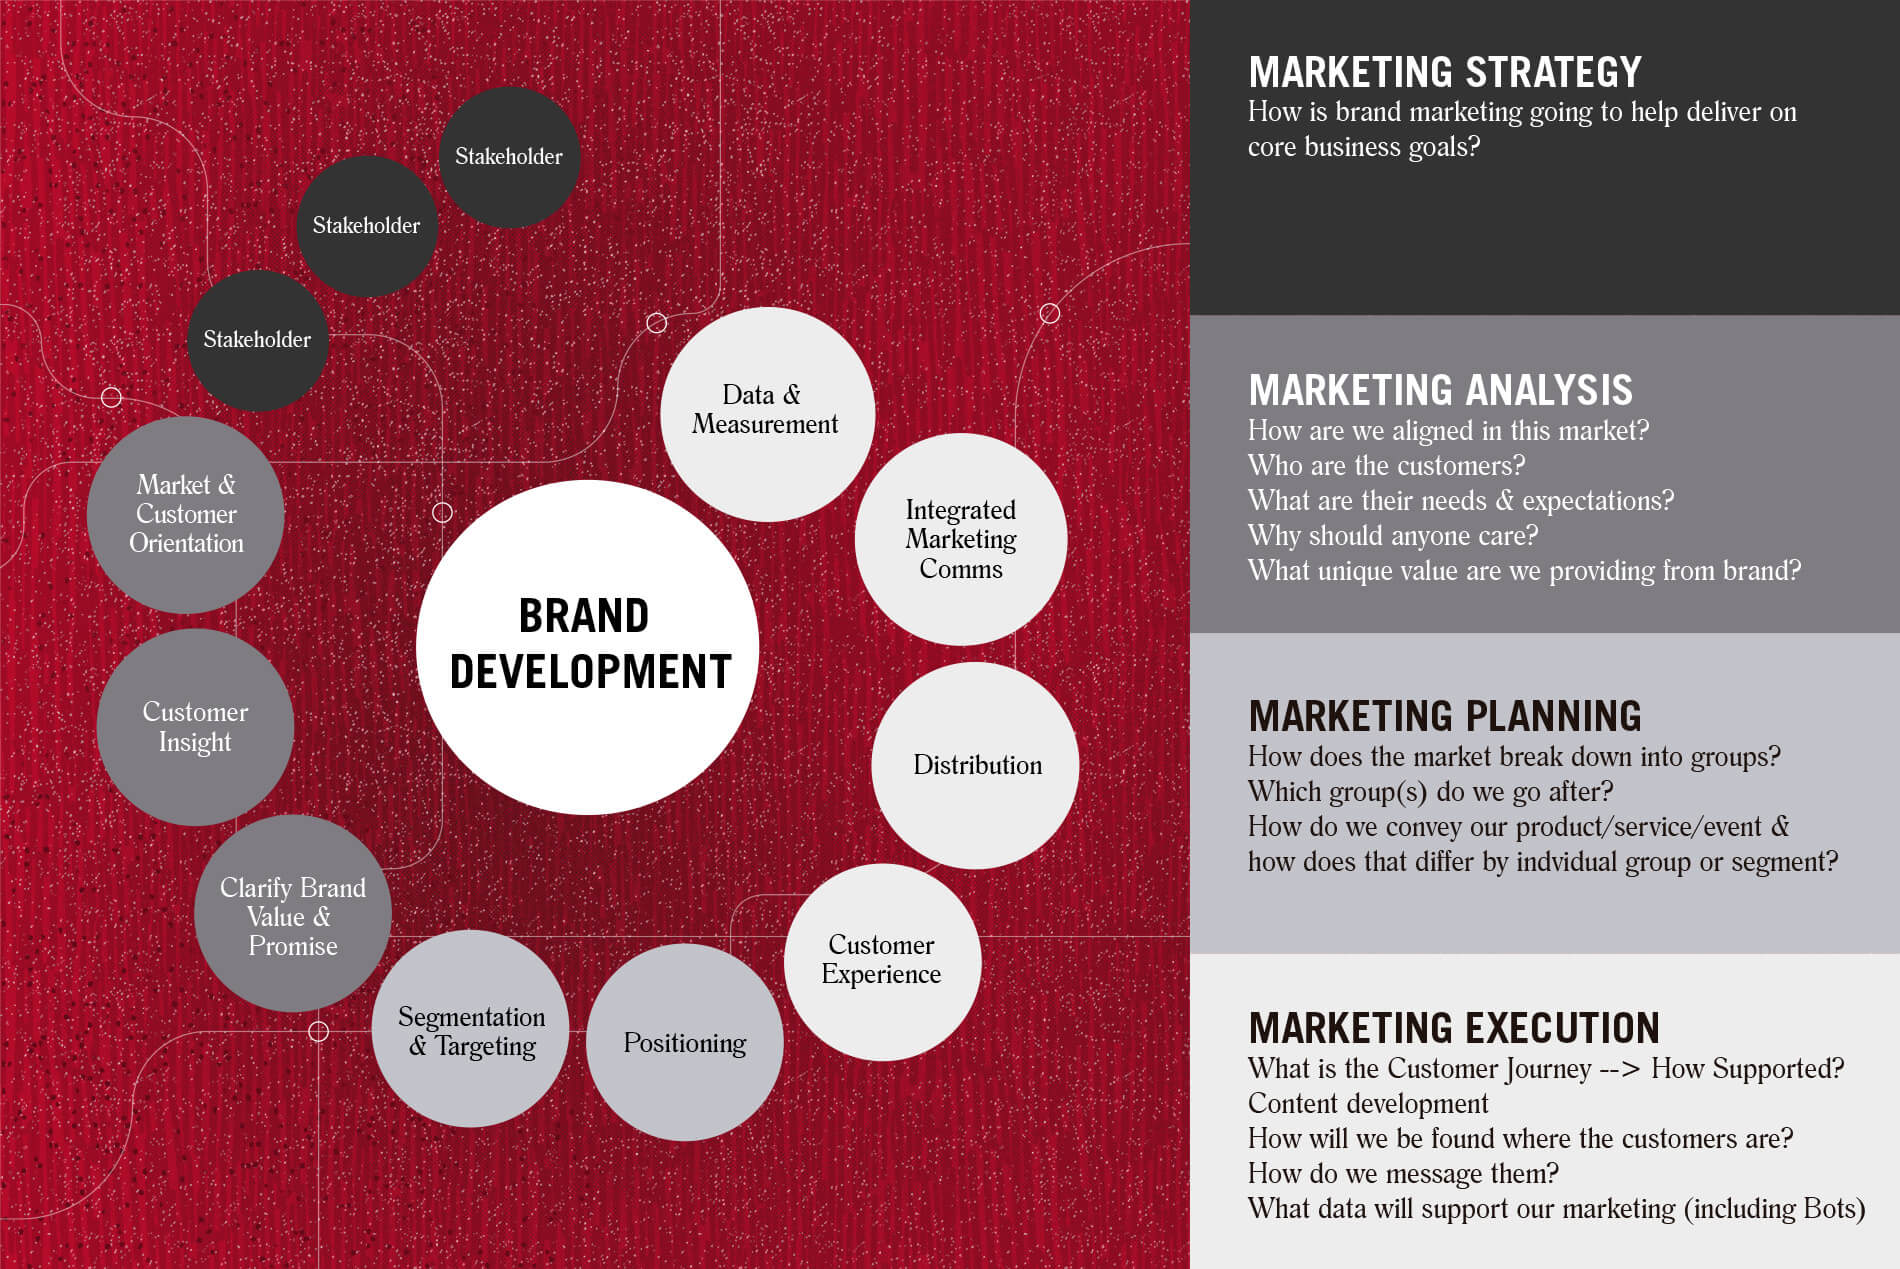 Integrated Marketing - Process